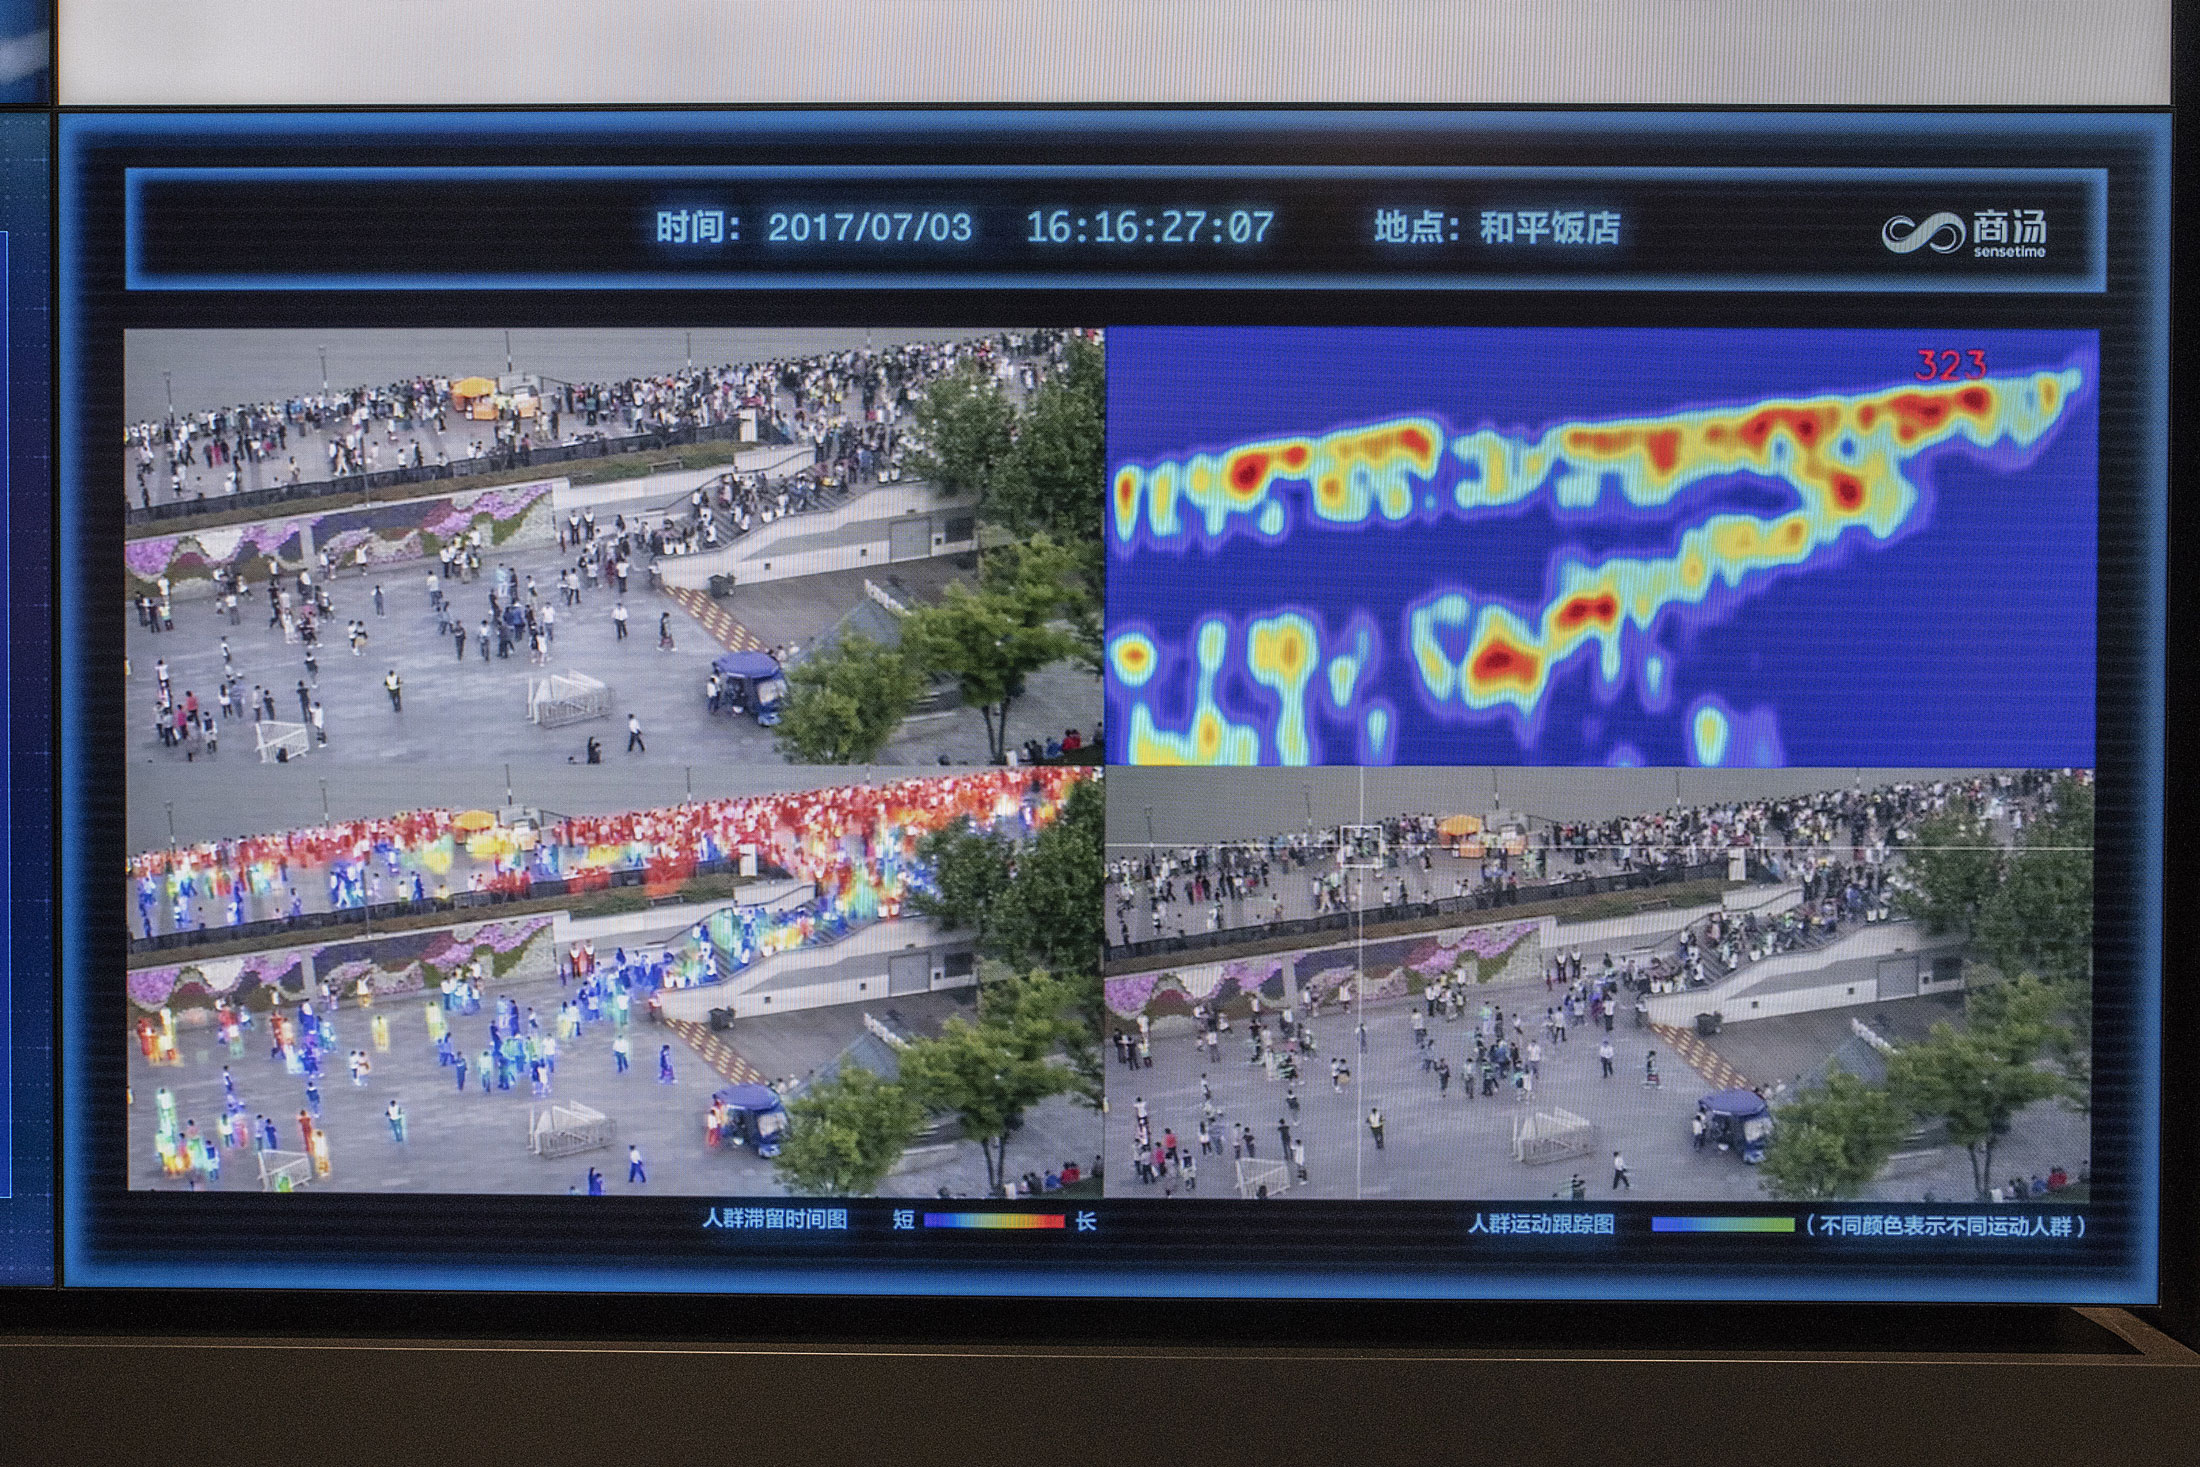 Pedestrian-detection technology at China's SenseTime Group Ltd.